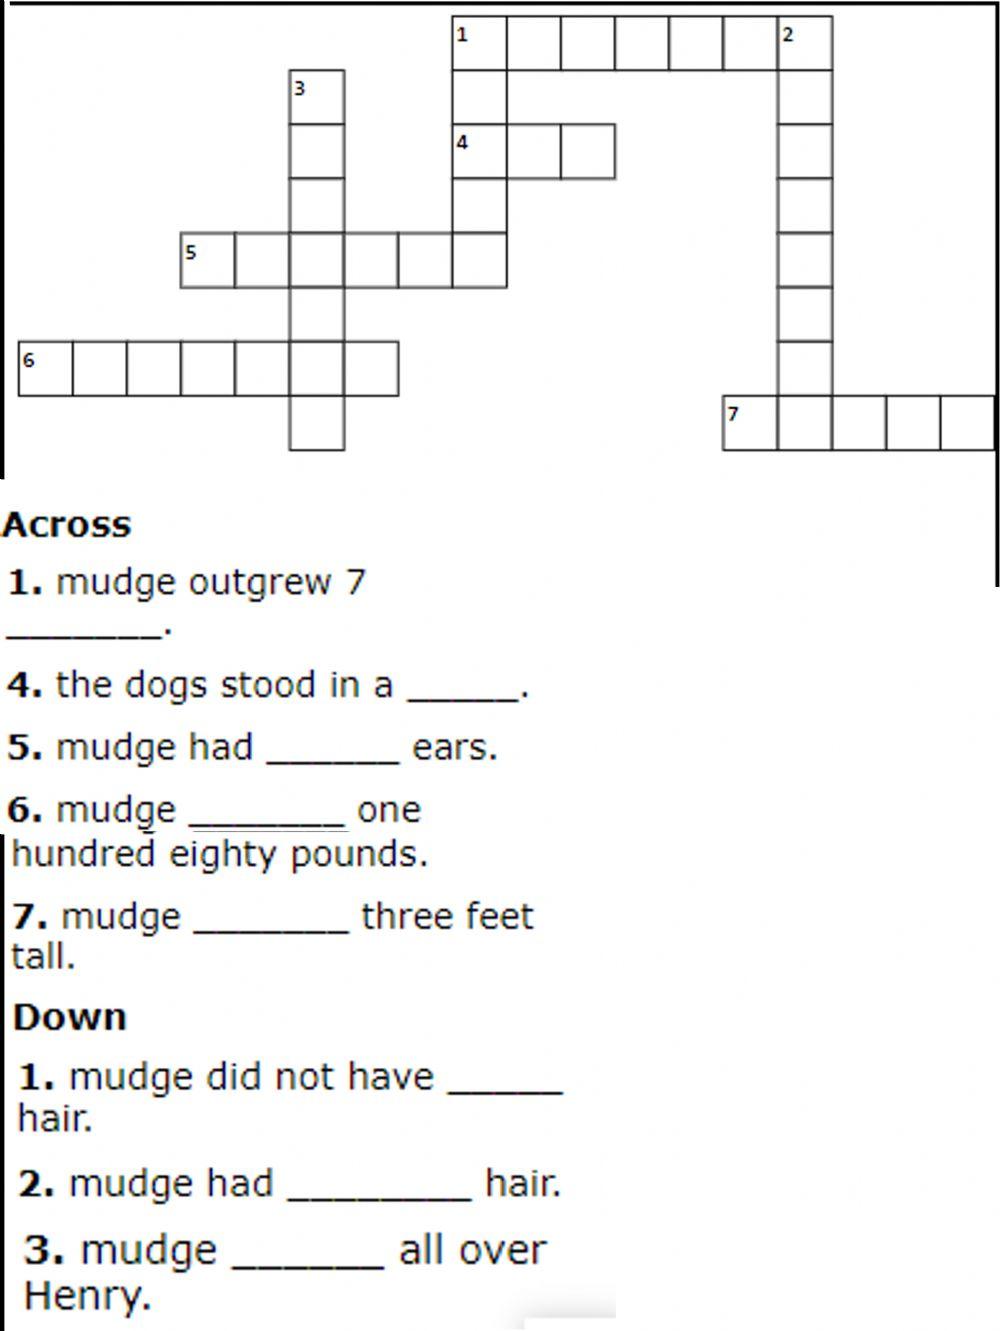 Henry & Mudge Crossword